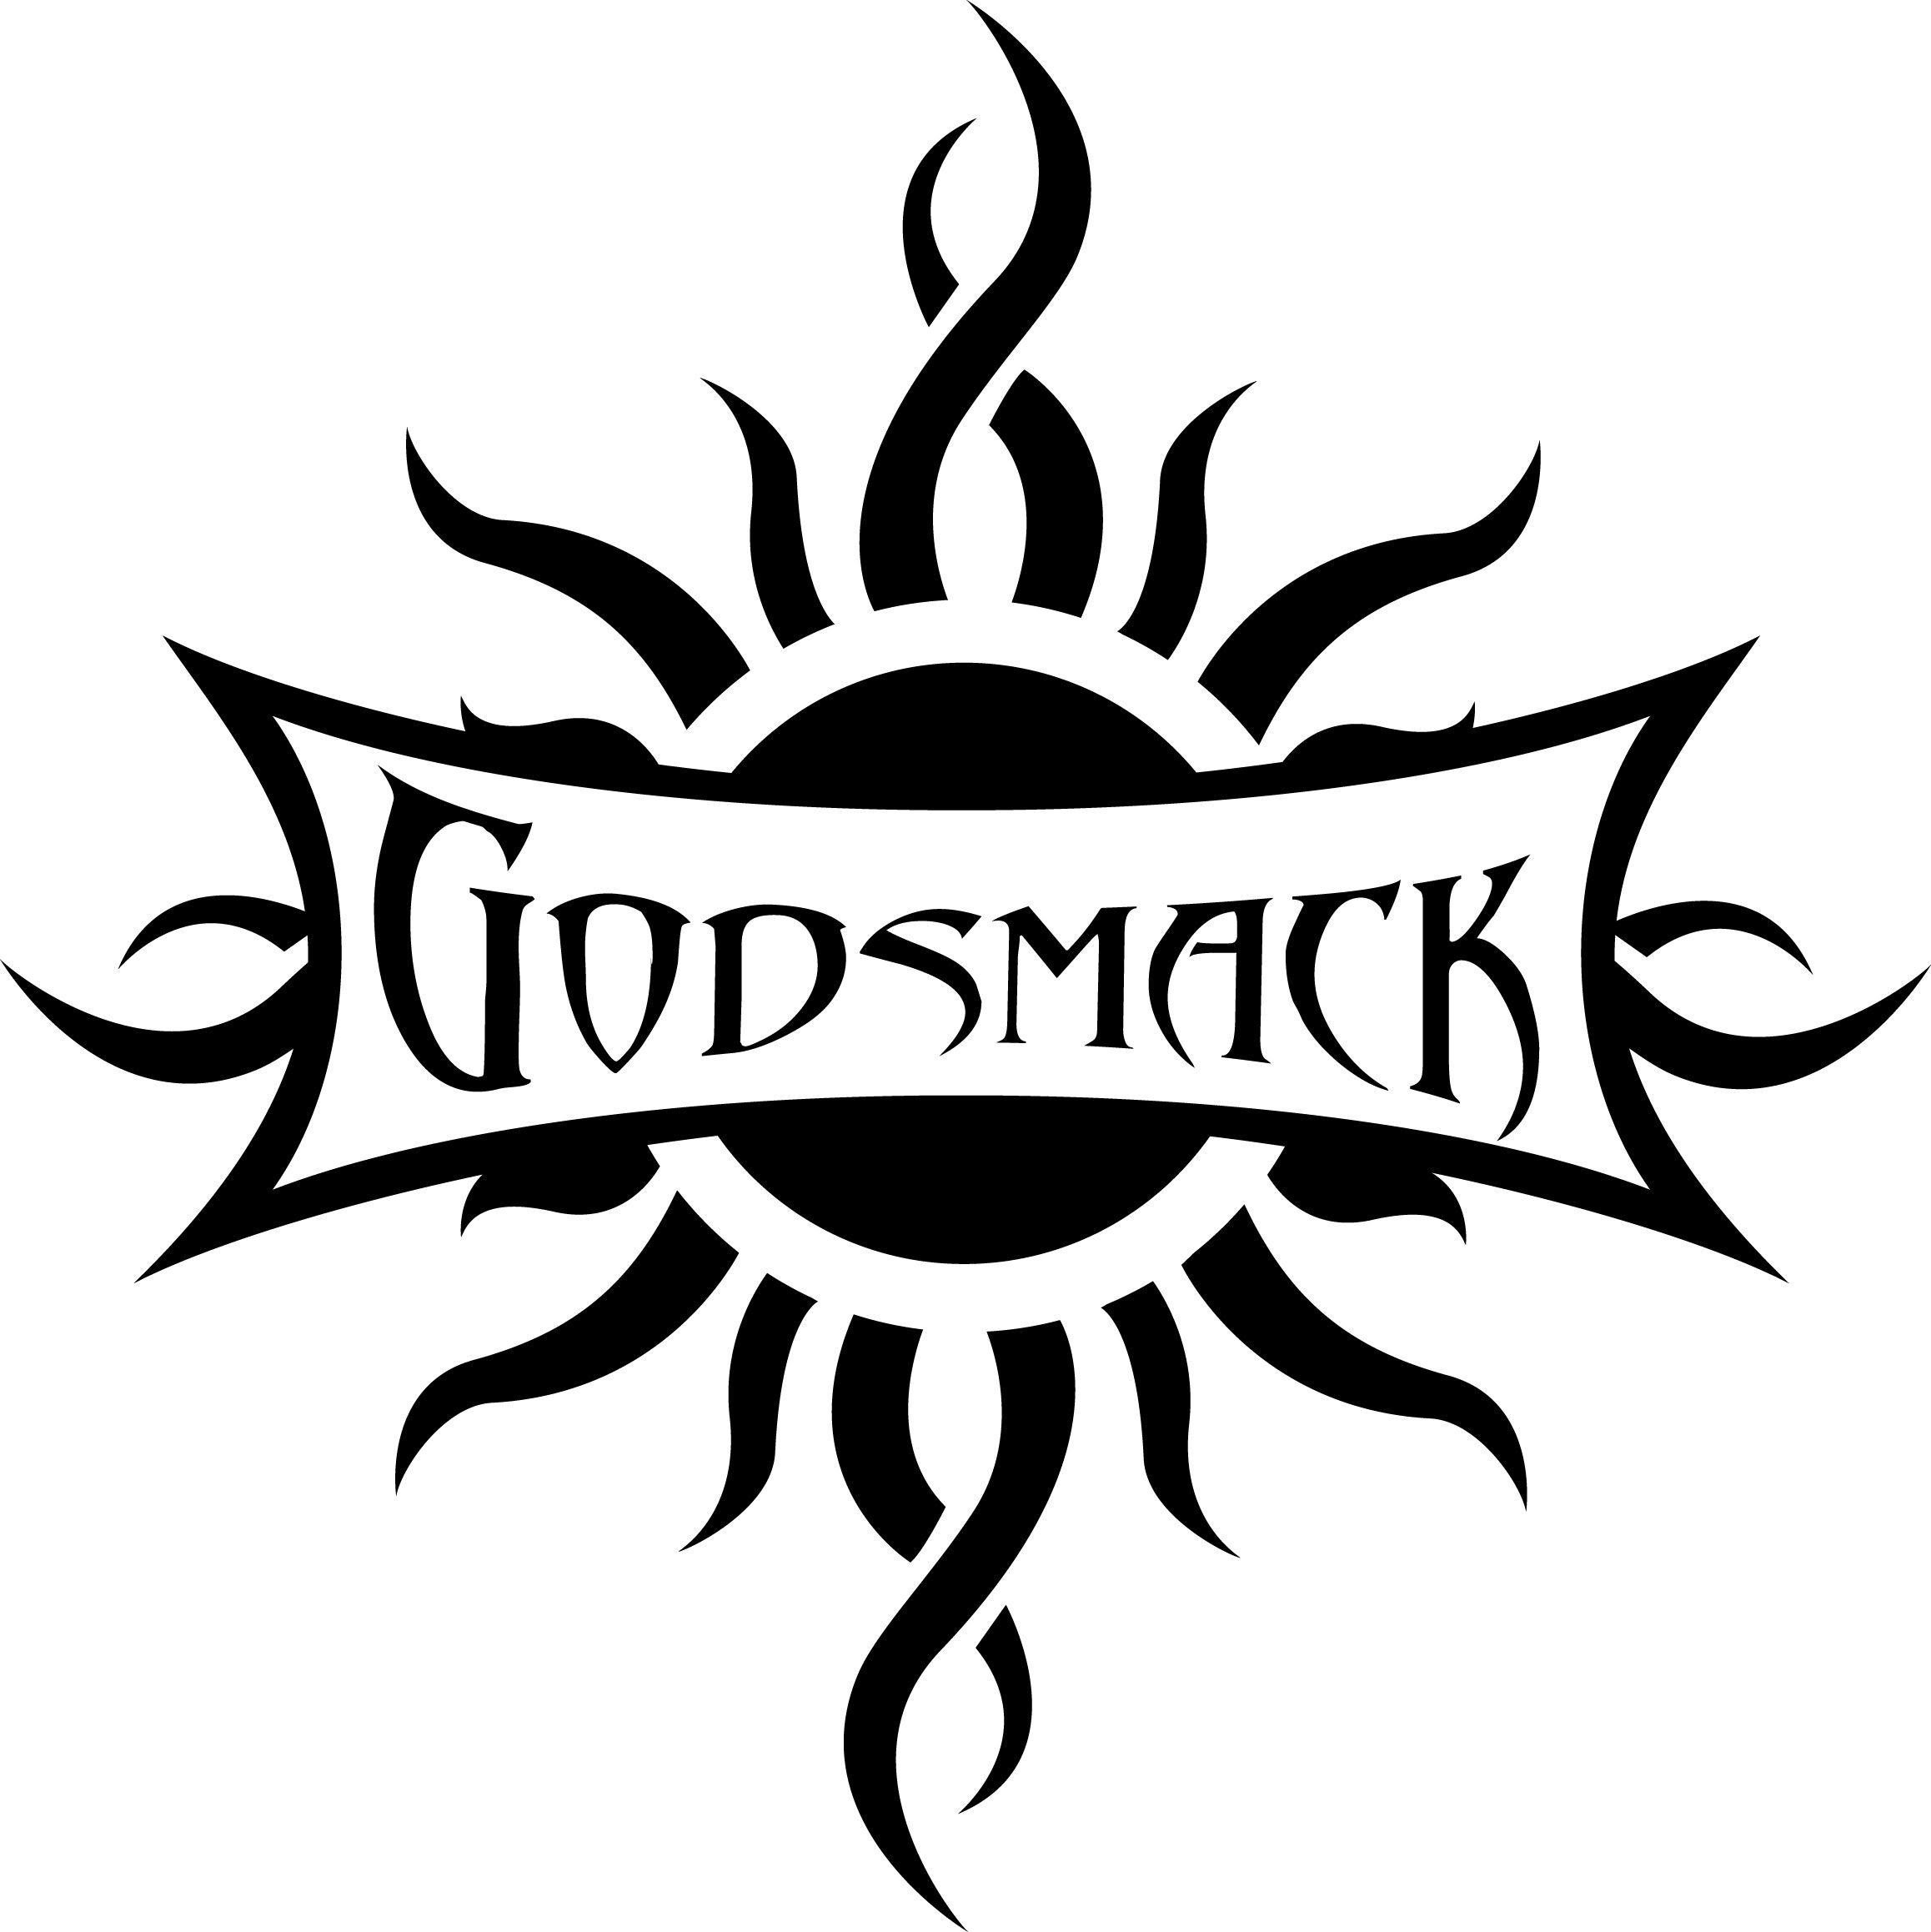 Godsmack Logo - Godsmack Logos